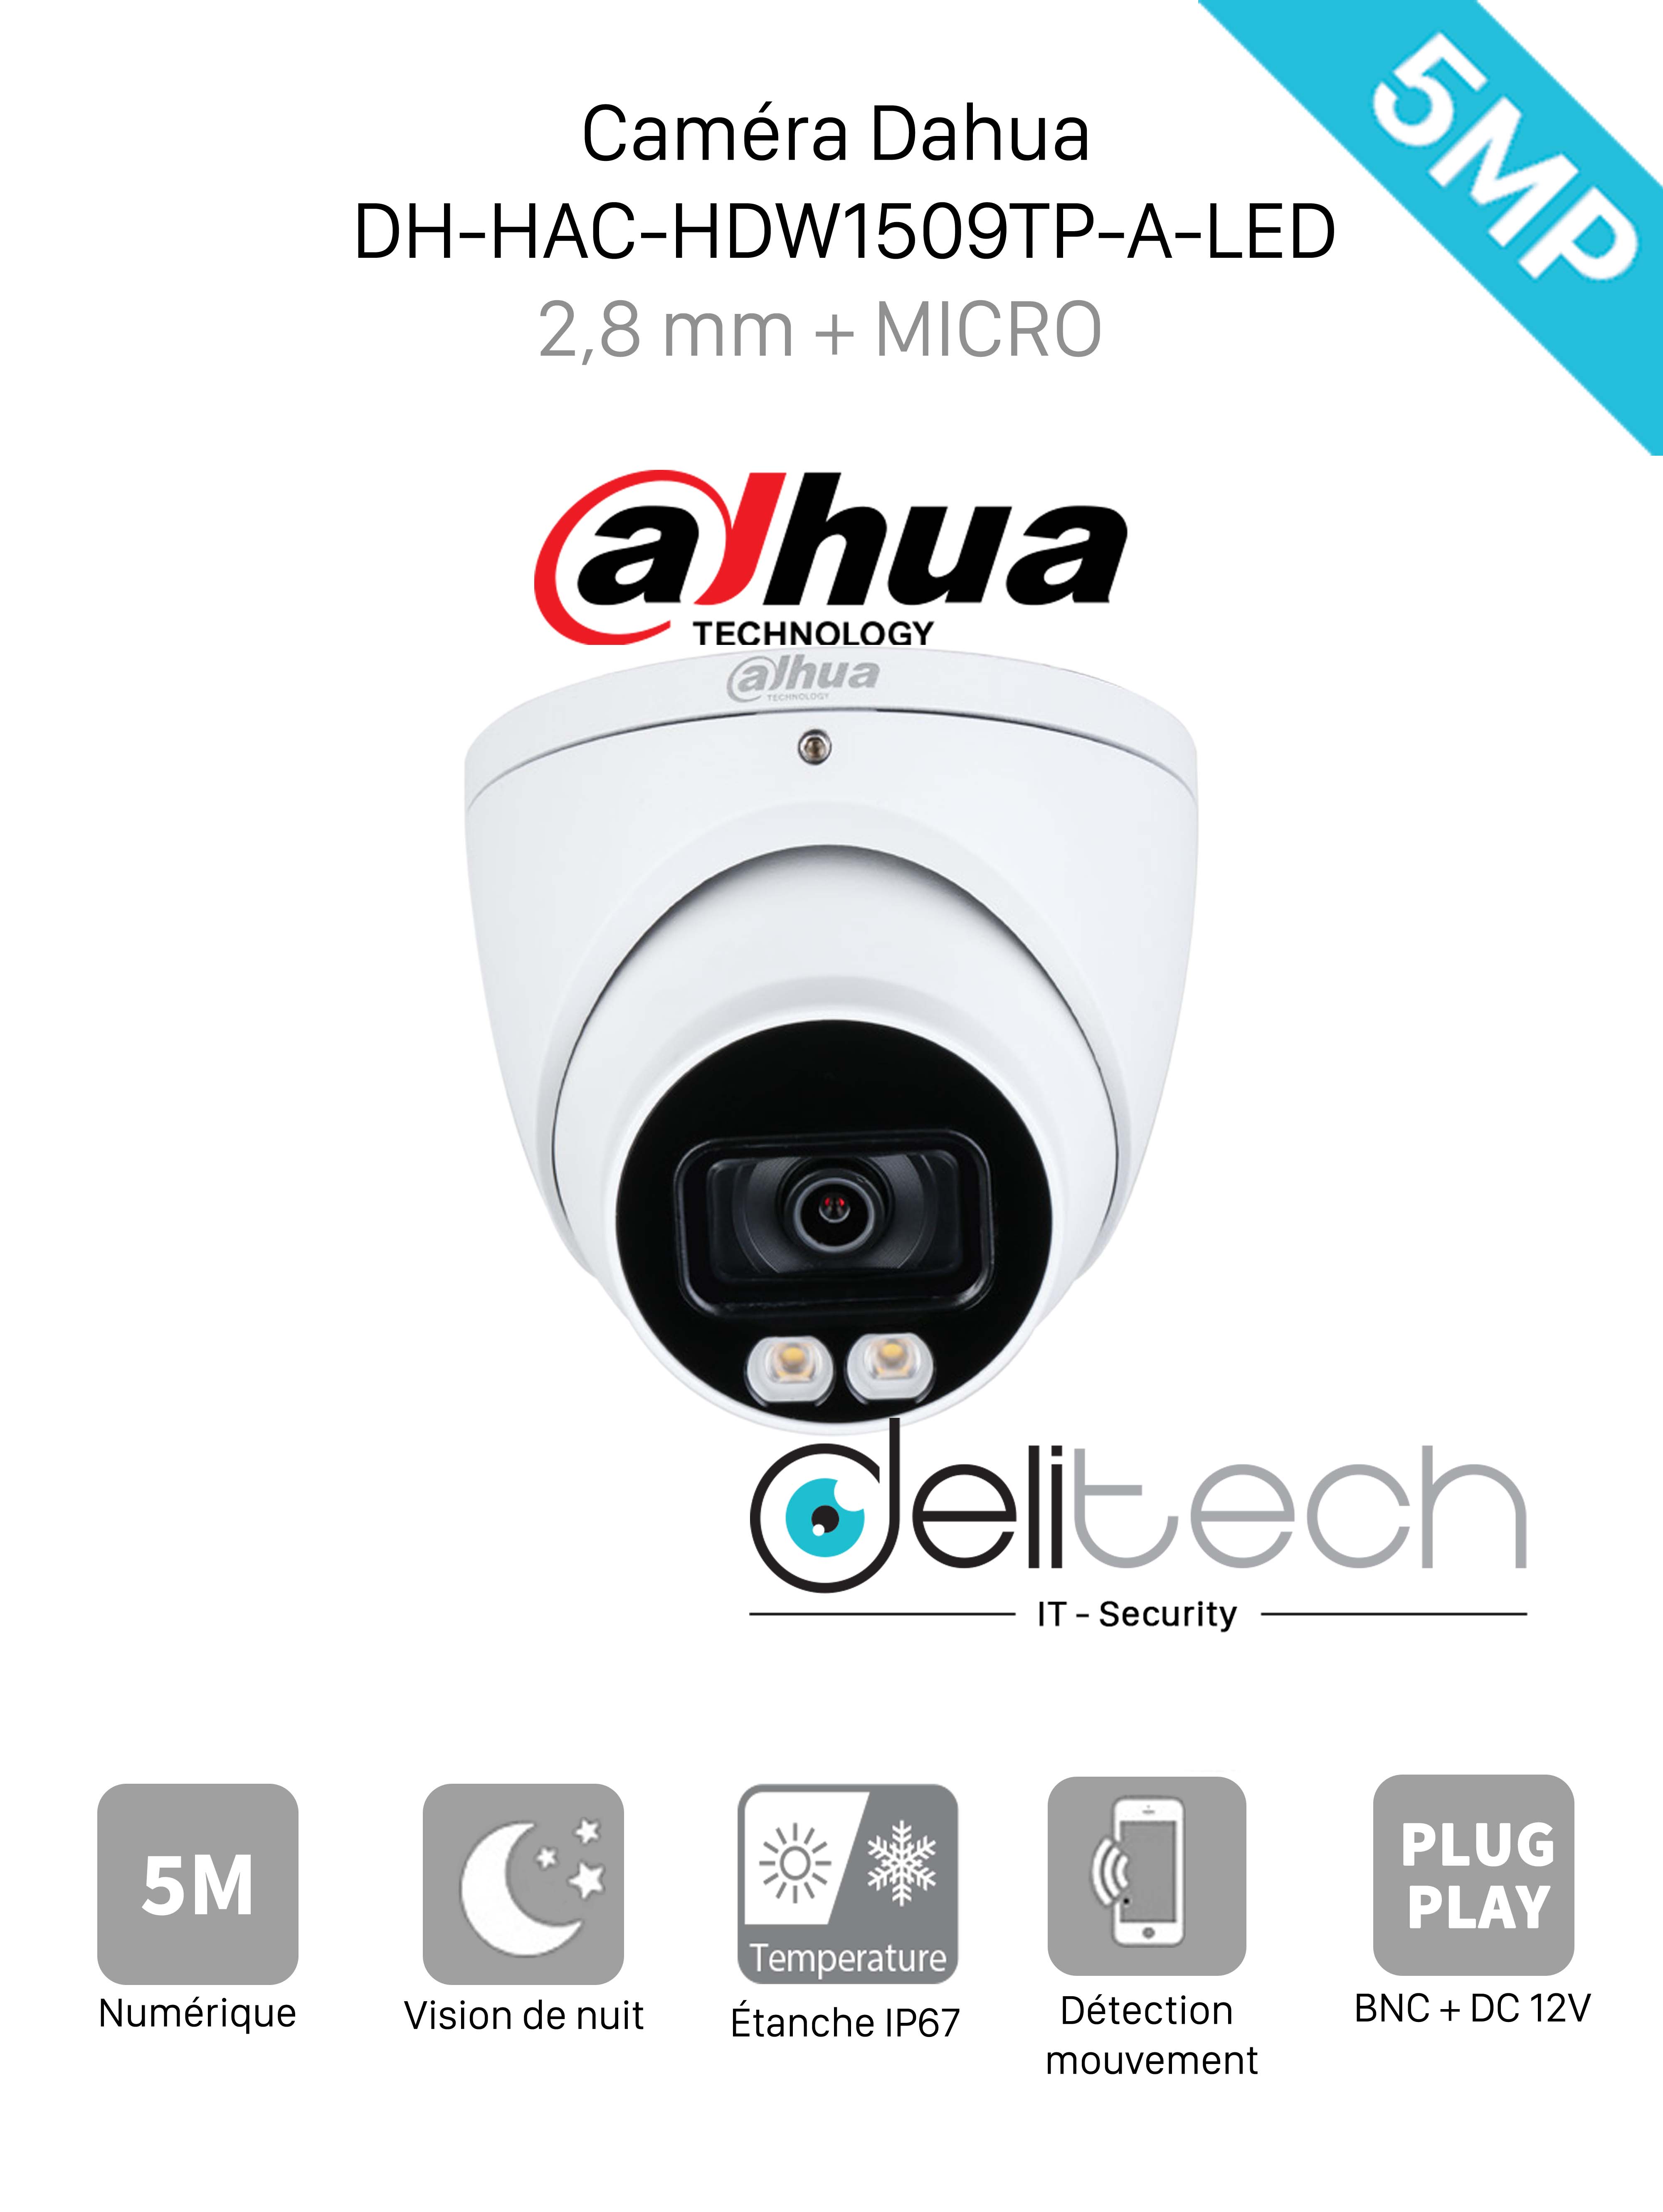 Caméra DAHUA DH-HAC-HDW1509TP-A-LED